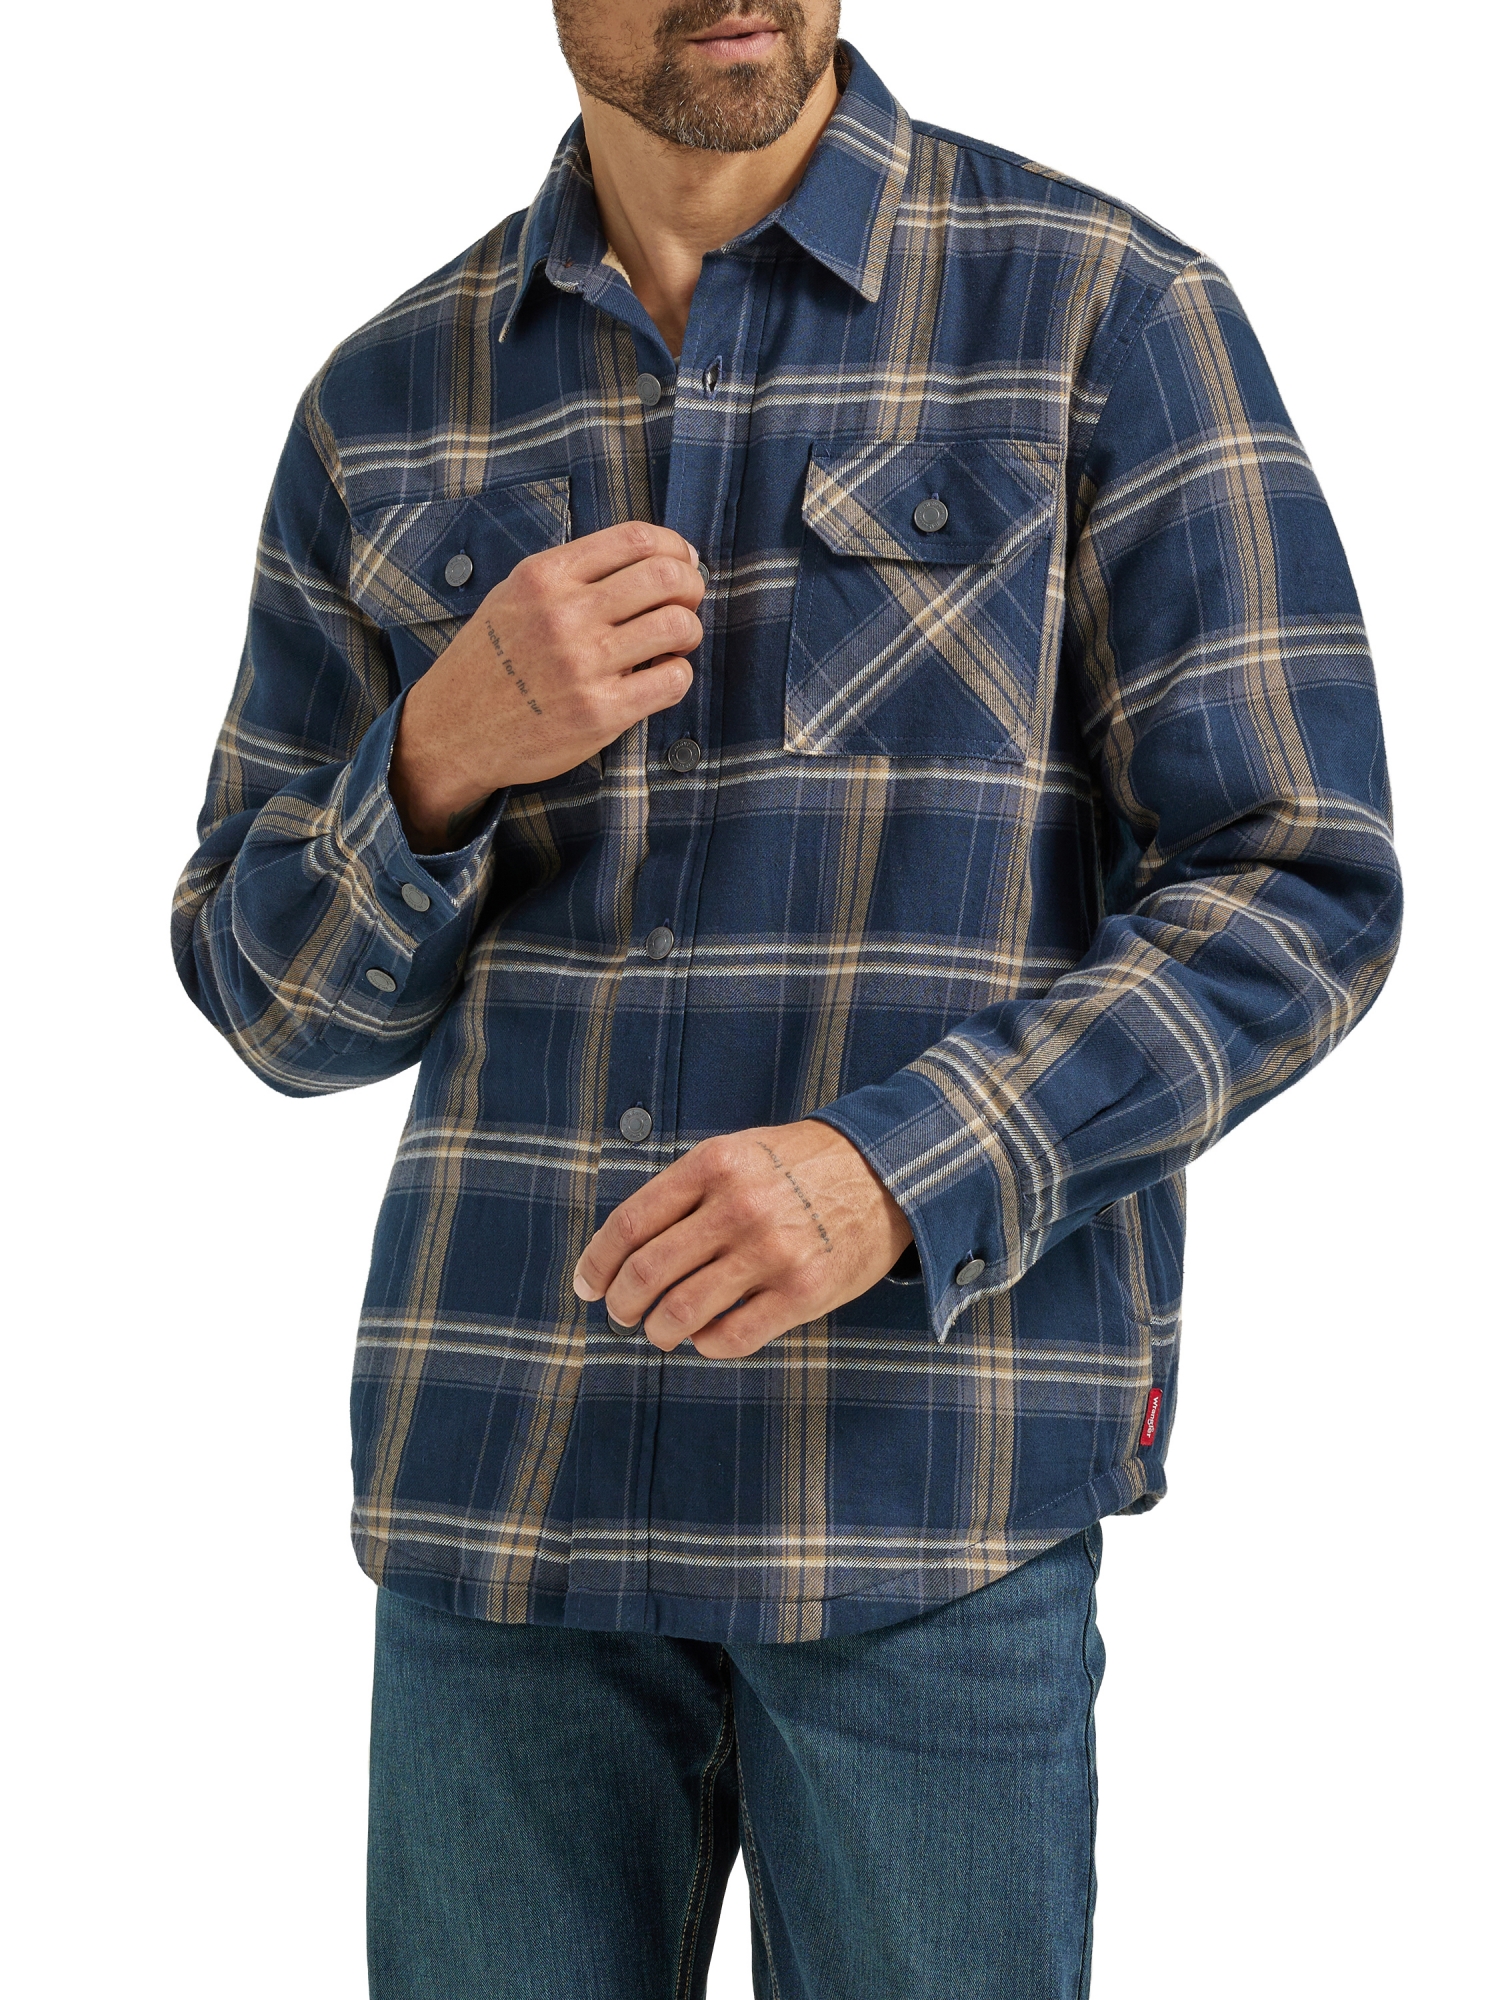 Wrangler Men's Long Sleeve Heavyweight Shirt - image 4 of 8